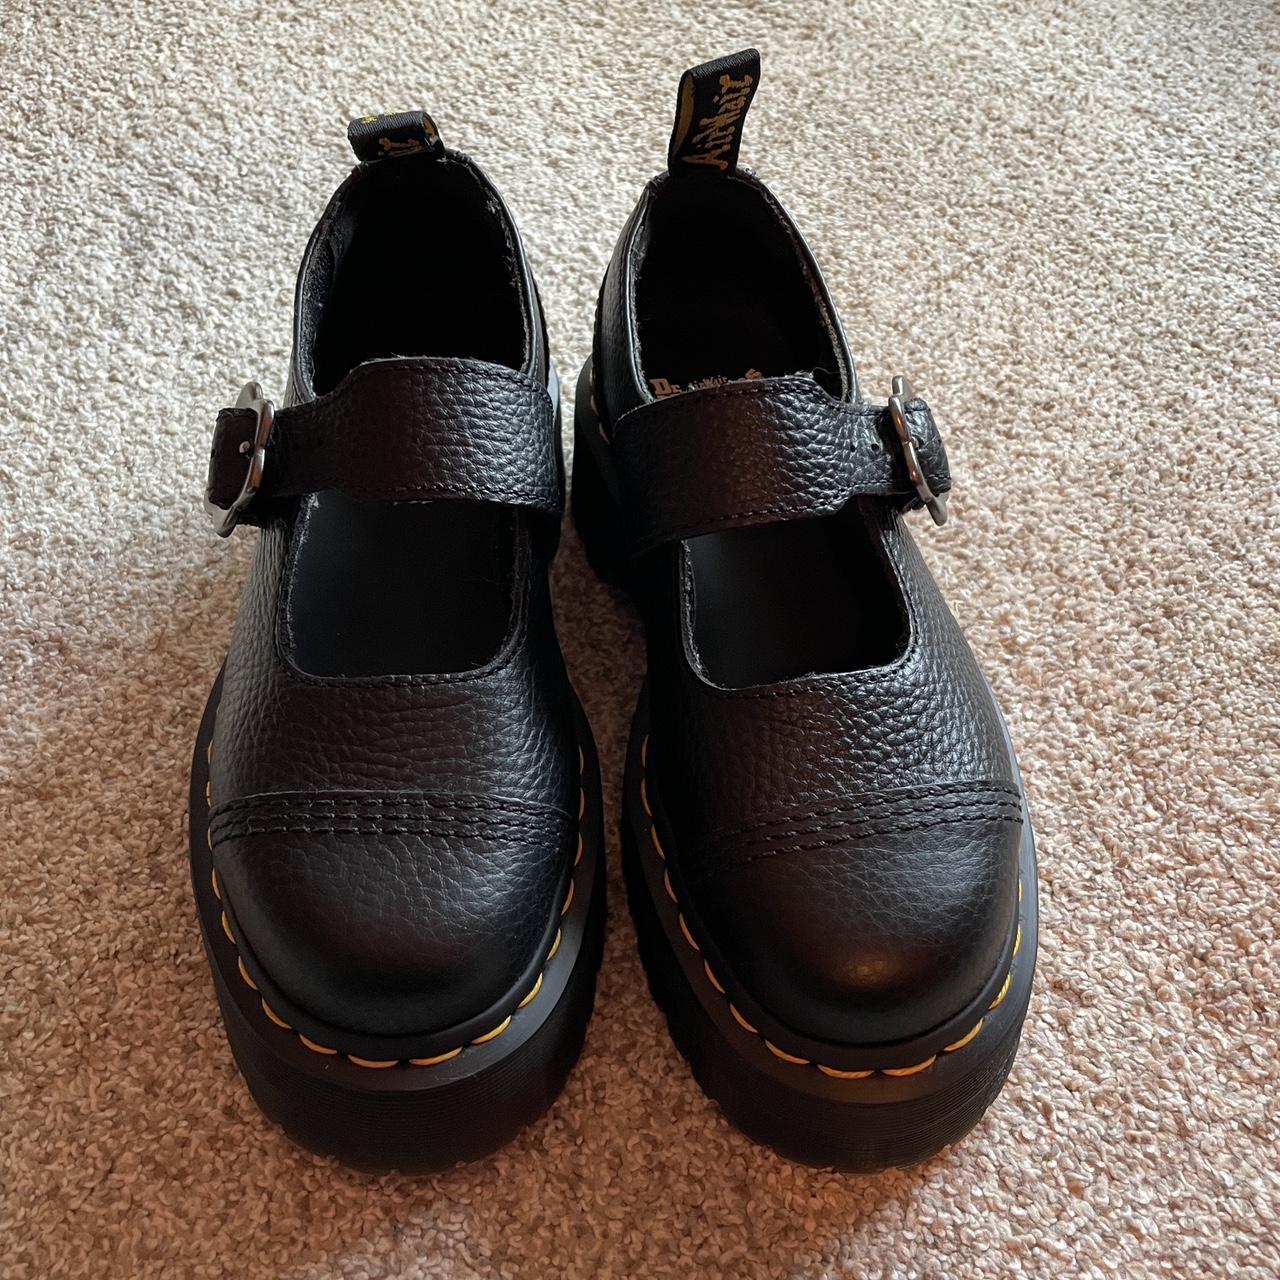 Addina Flower Buckle Leather Platform Shoes, Black